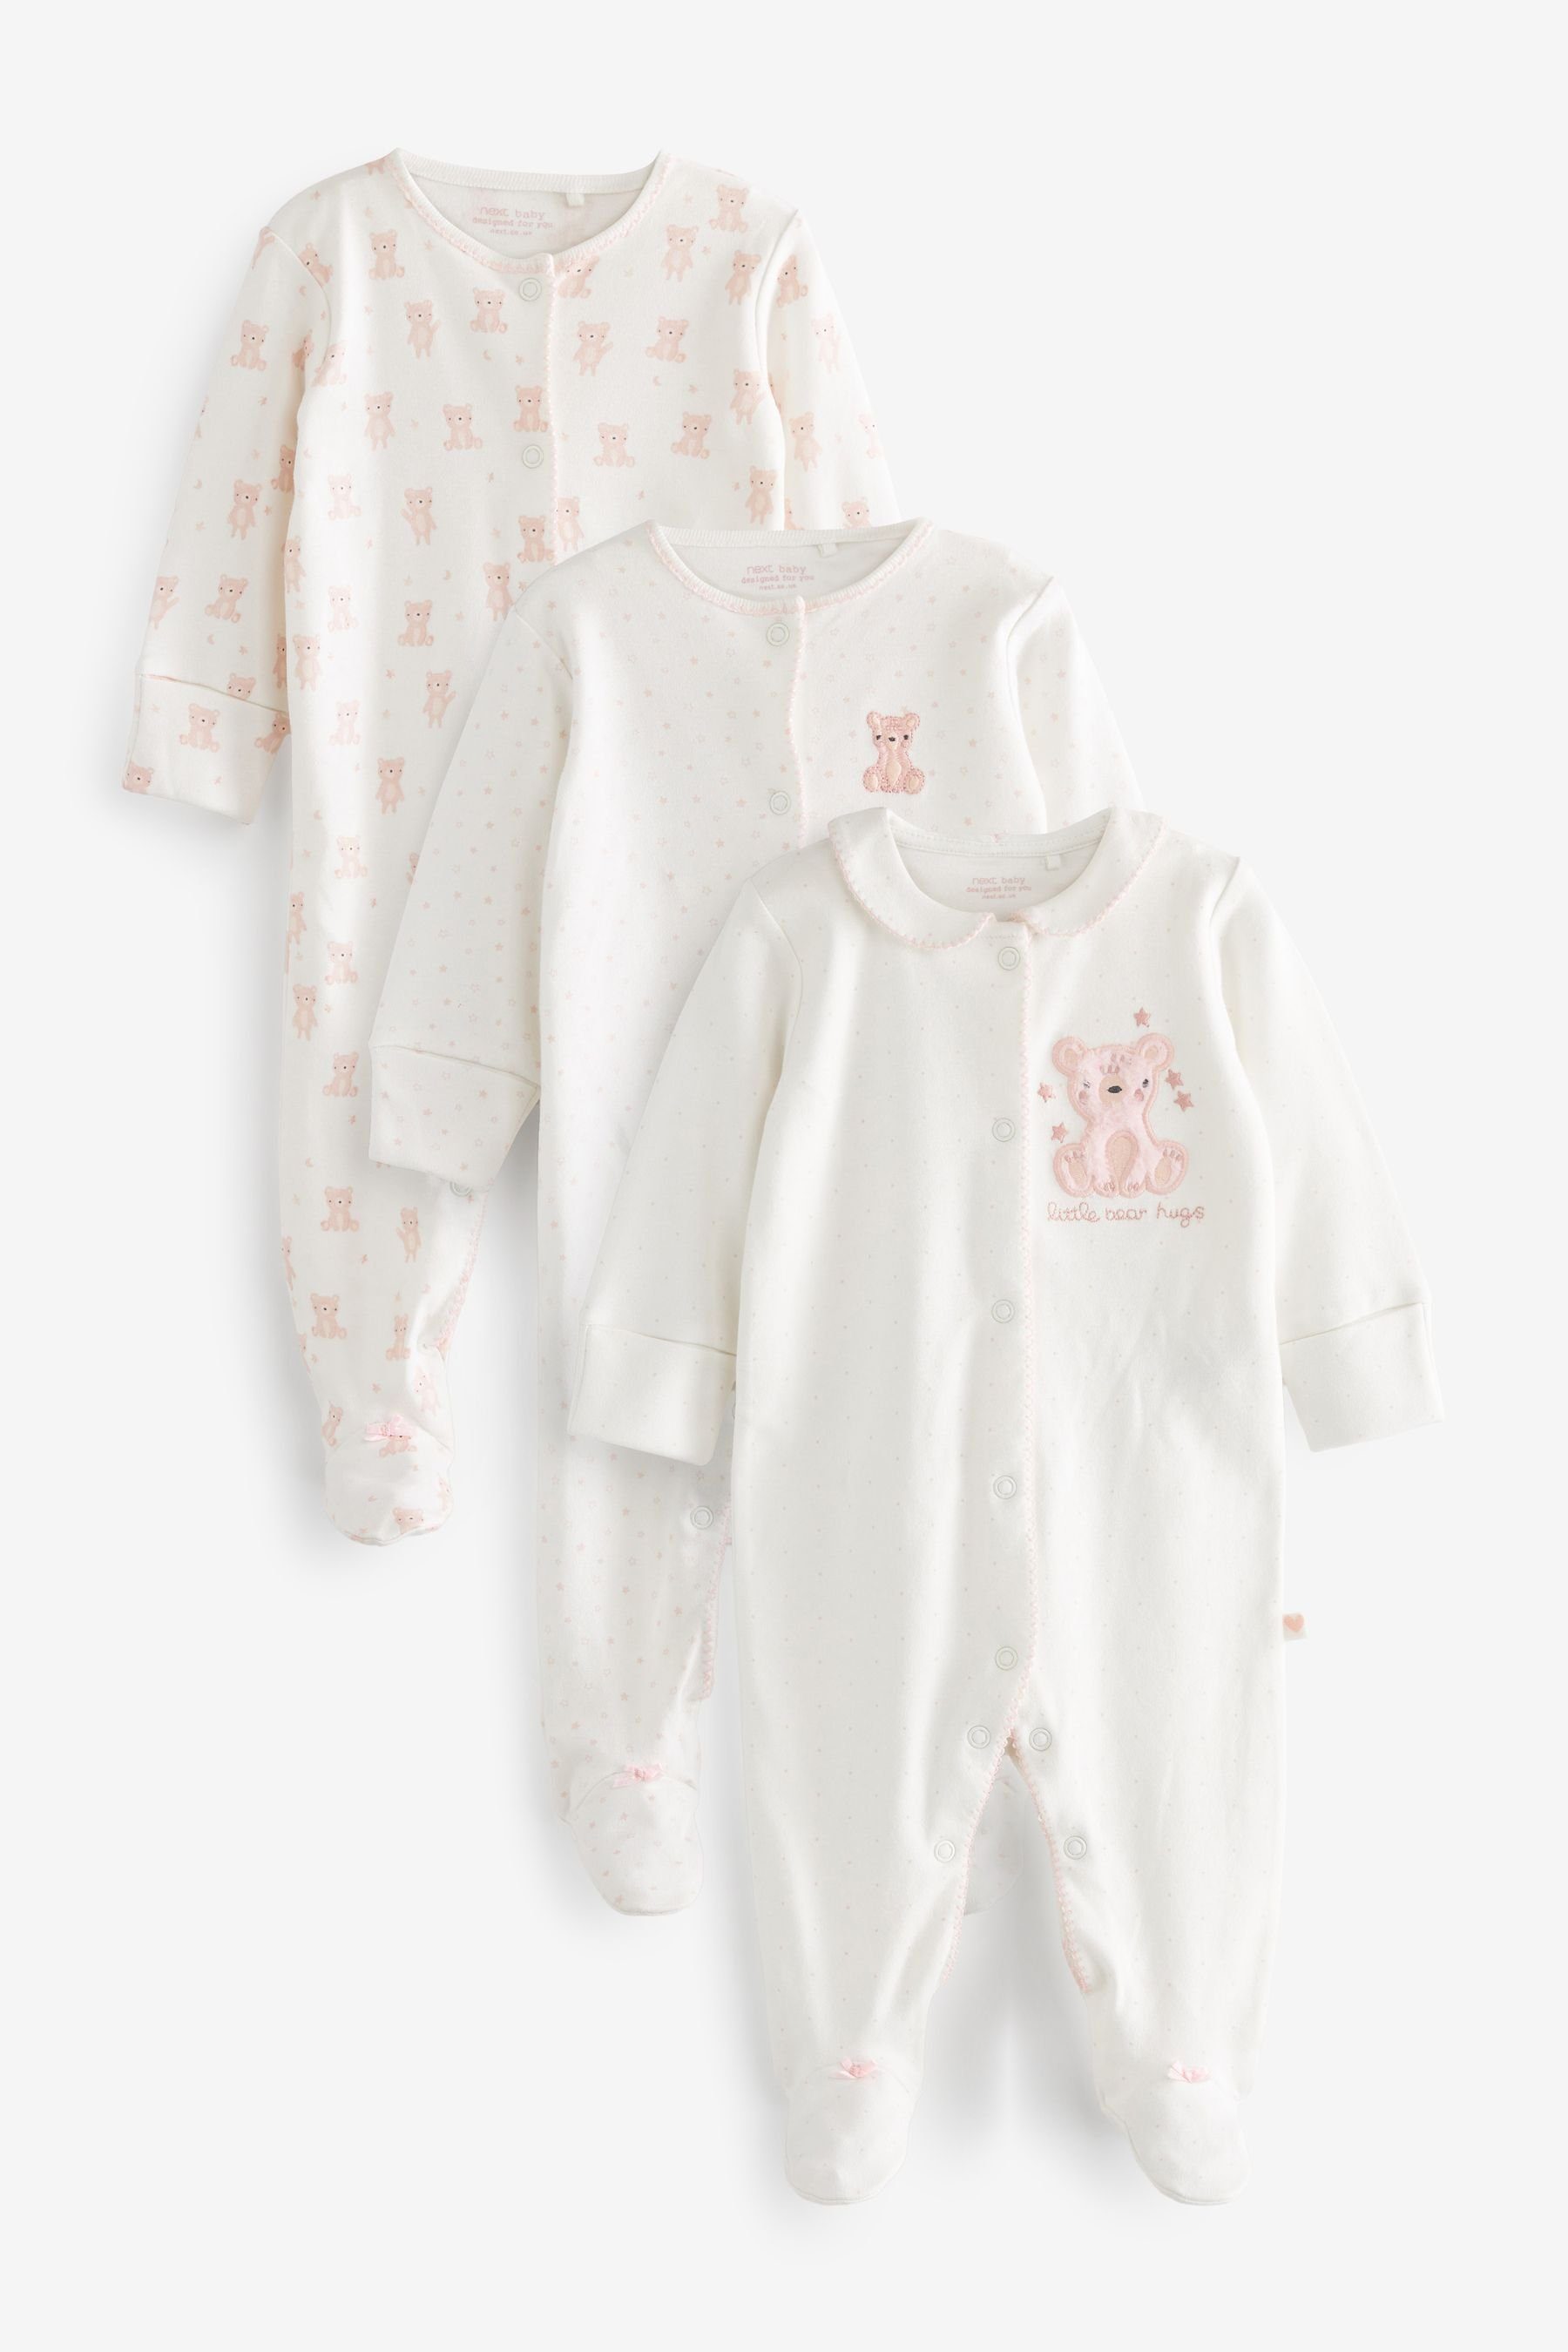 Next Schlafoverall Pyjamas, 3er-Pack (3-tlg) White/Pink Bear